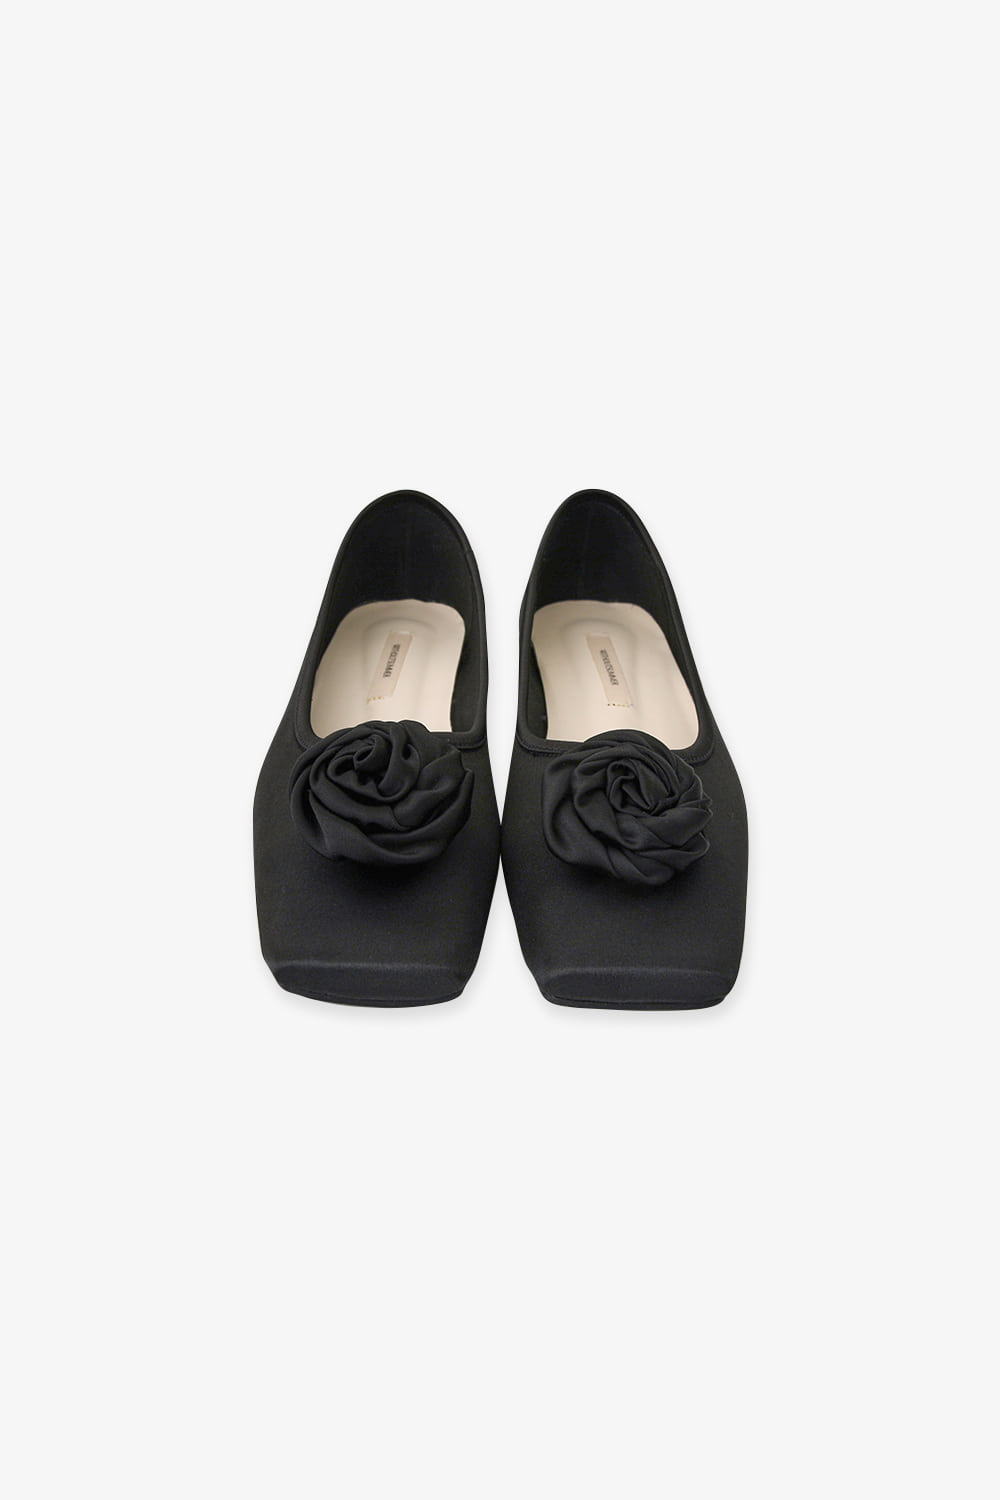 Rose flat shoes_black